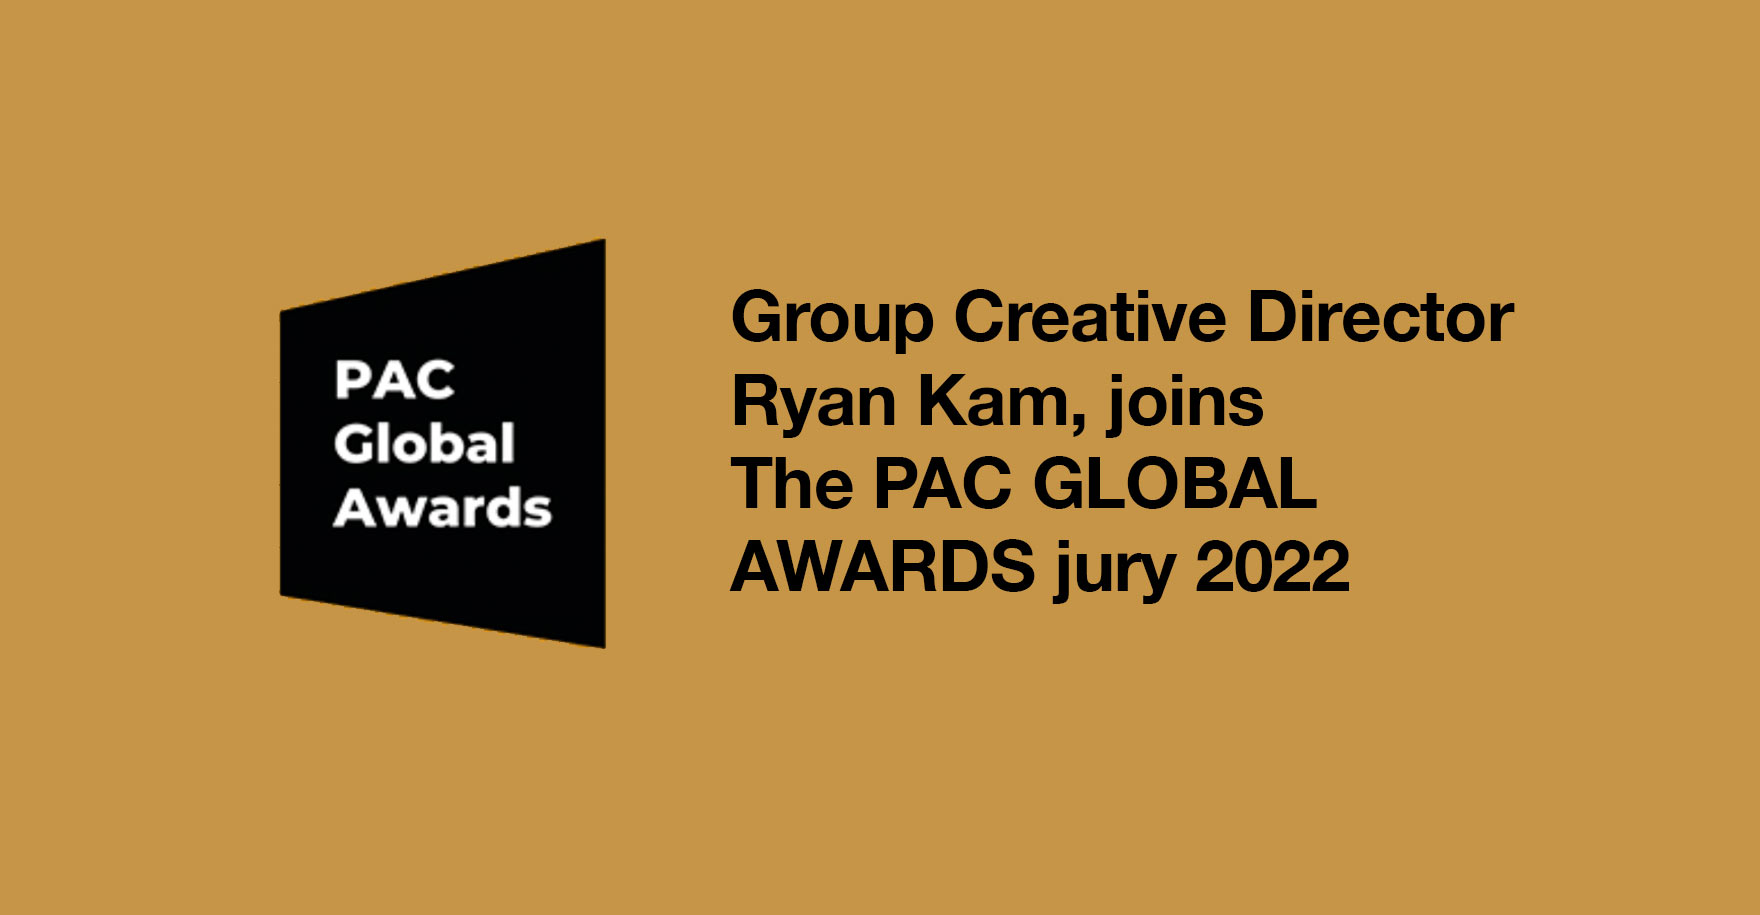 Ryan Kam to judge the 2022 PAC GLOBAL AWARDS